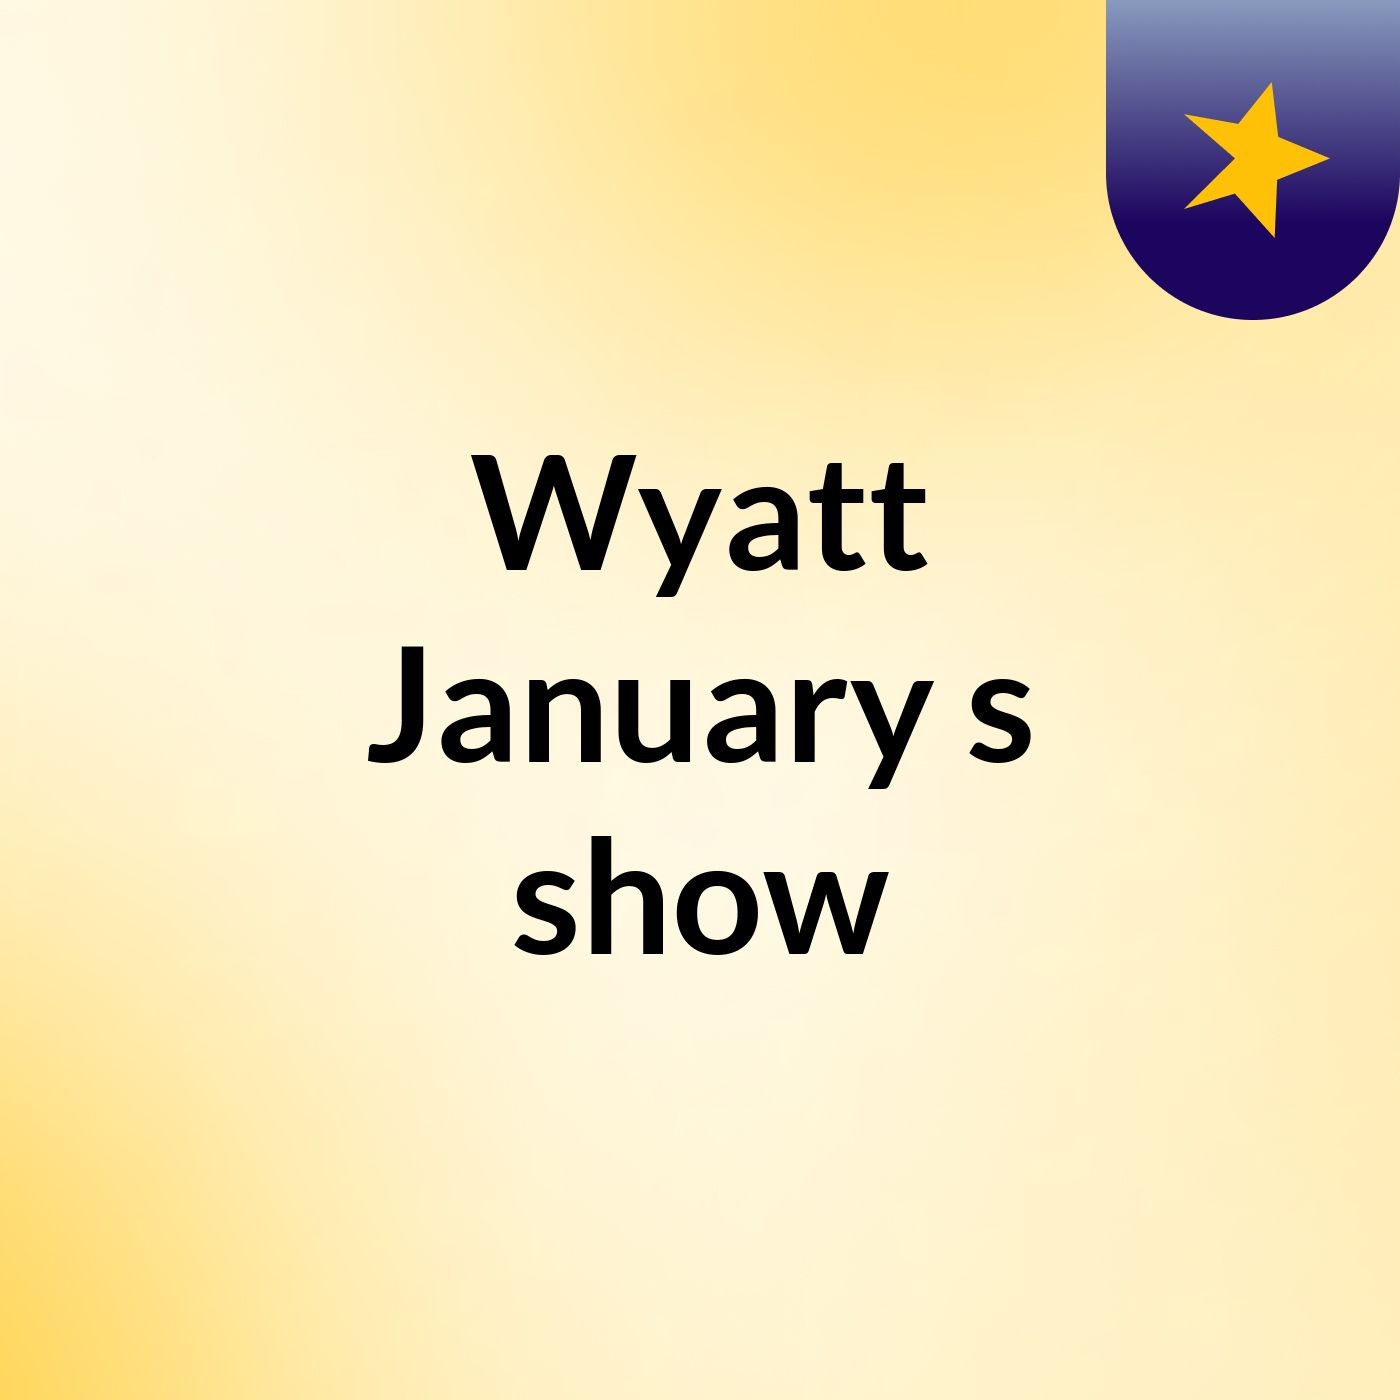 Wyatt January's show